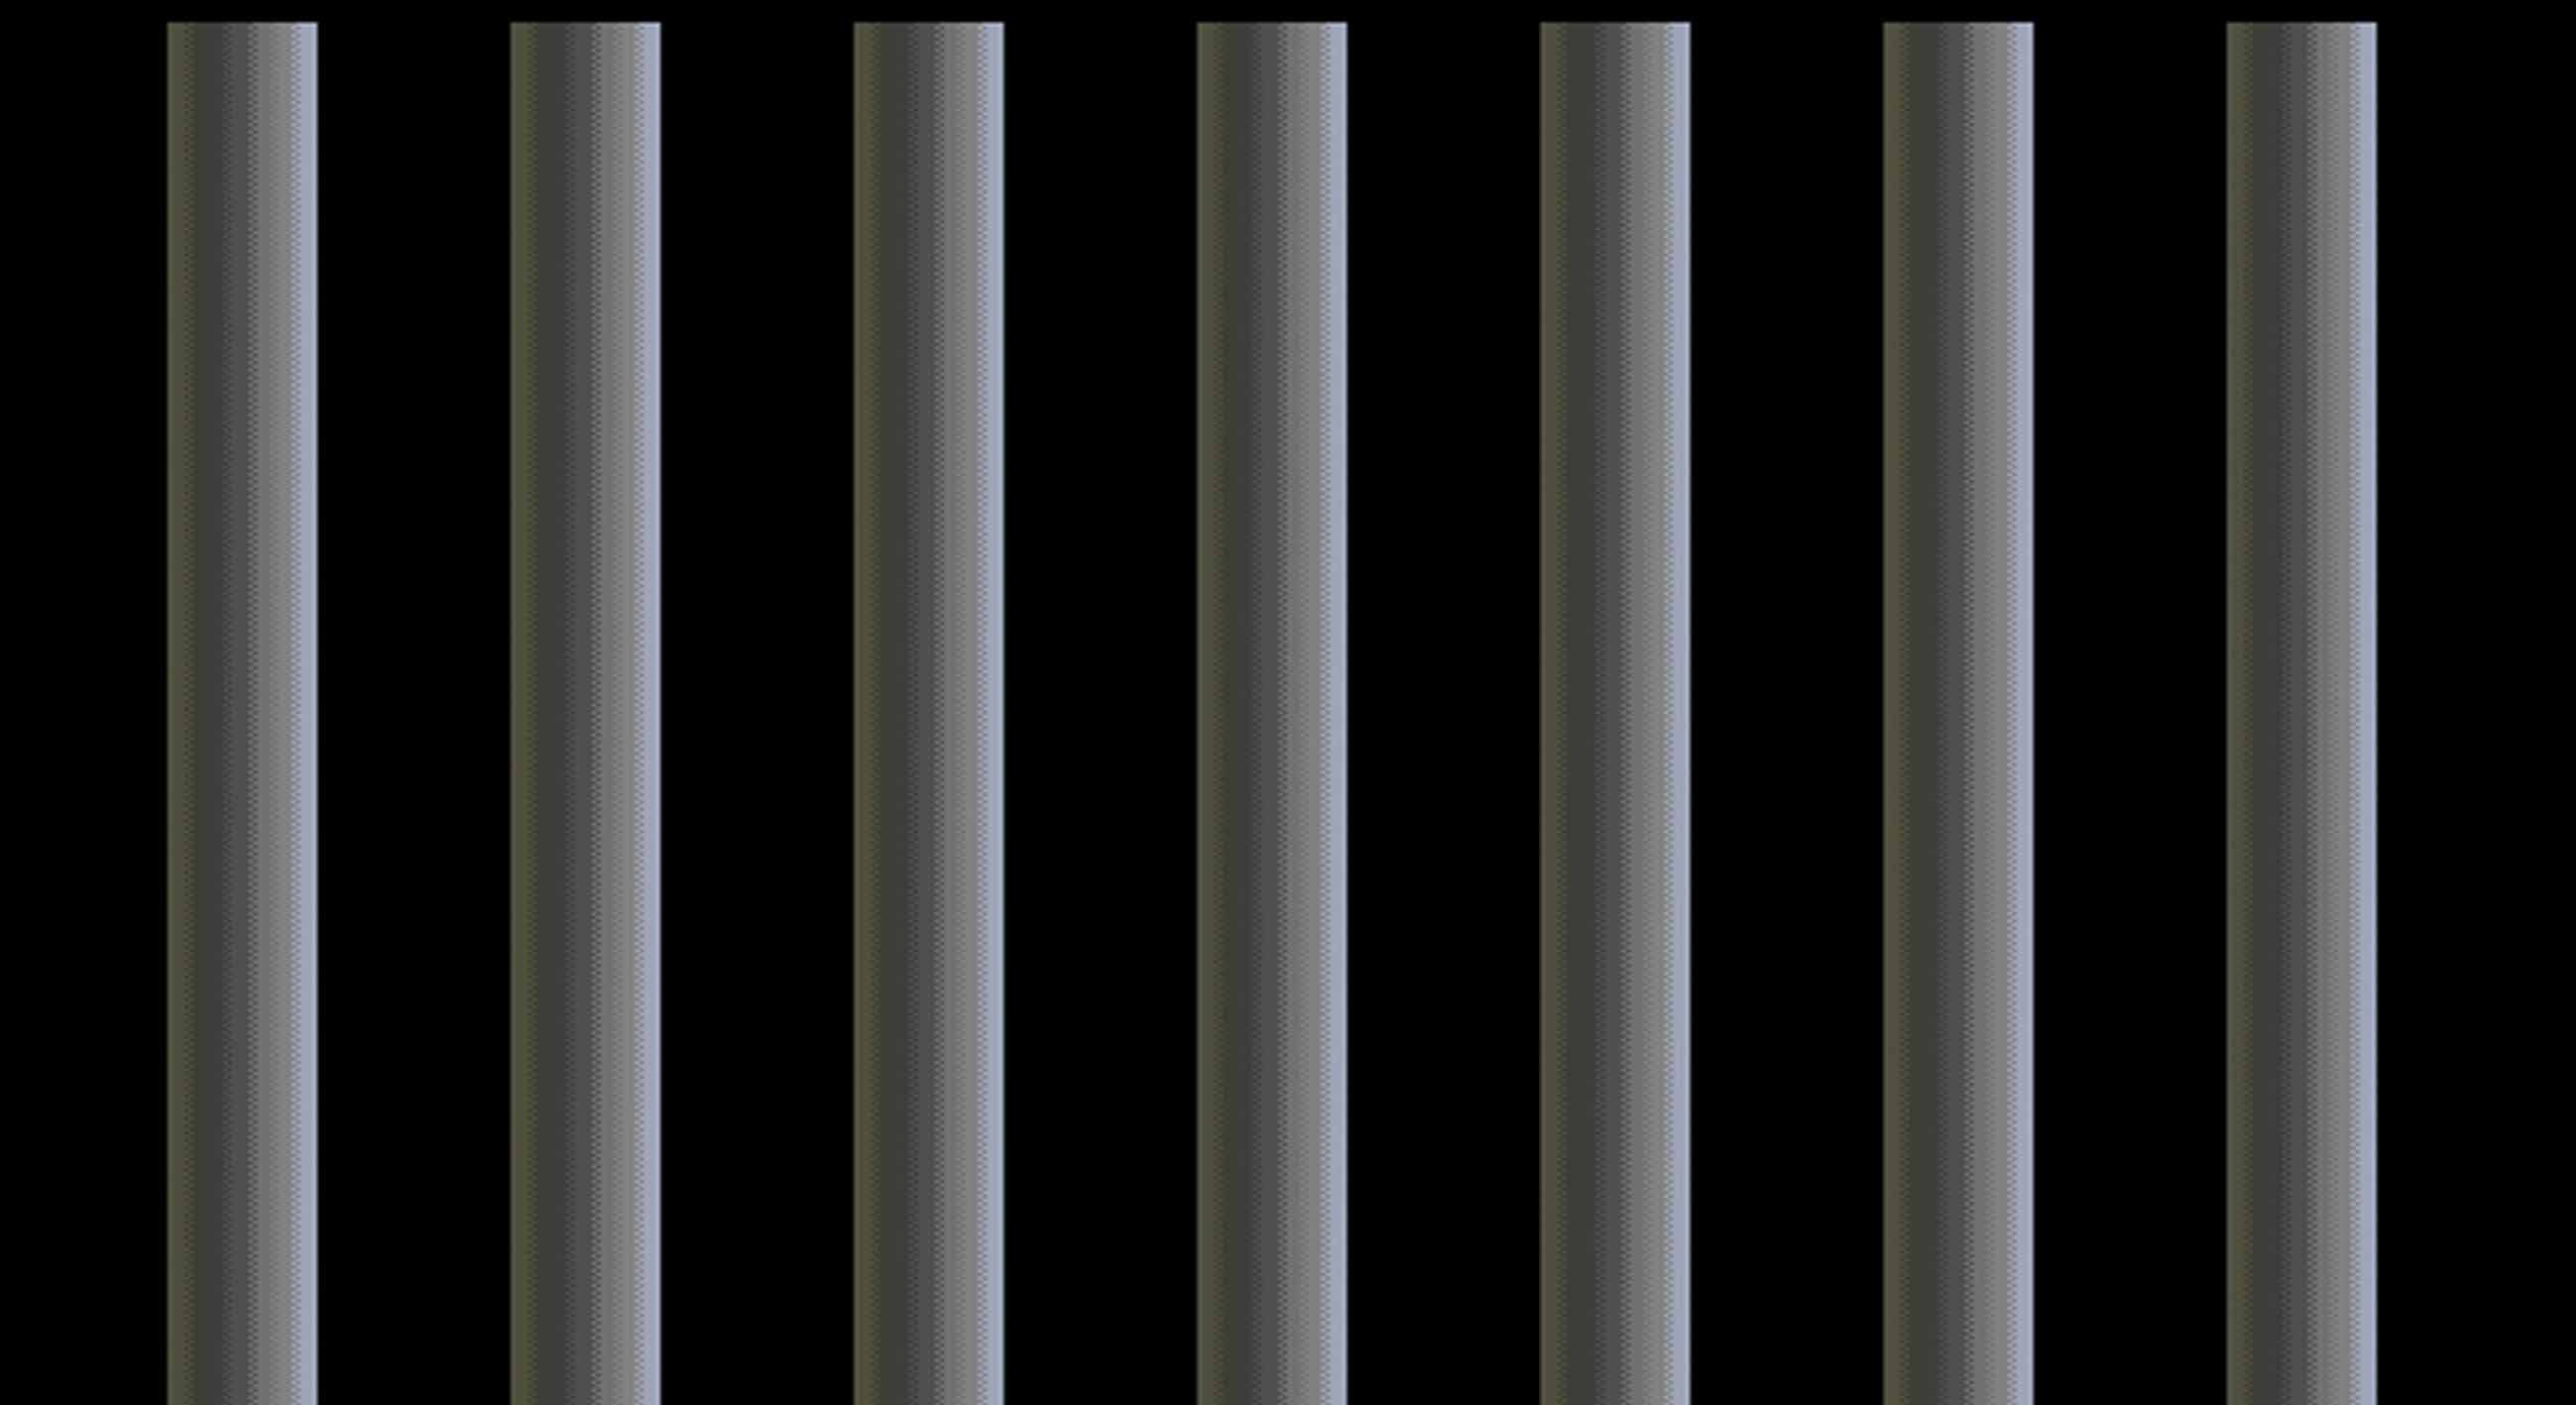 Prison Bar Clipart Free Images At Clker Com Vector Clip Art Online | My ...